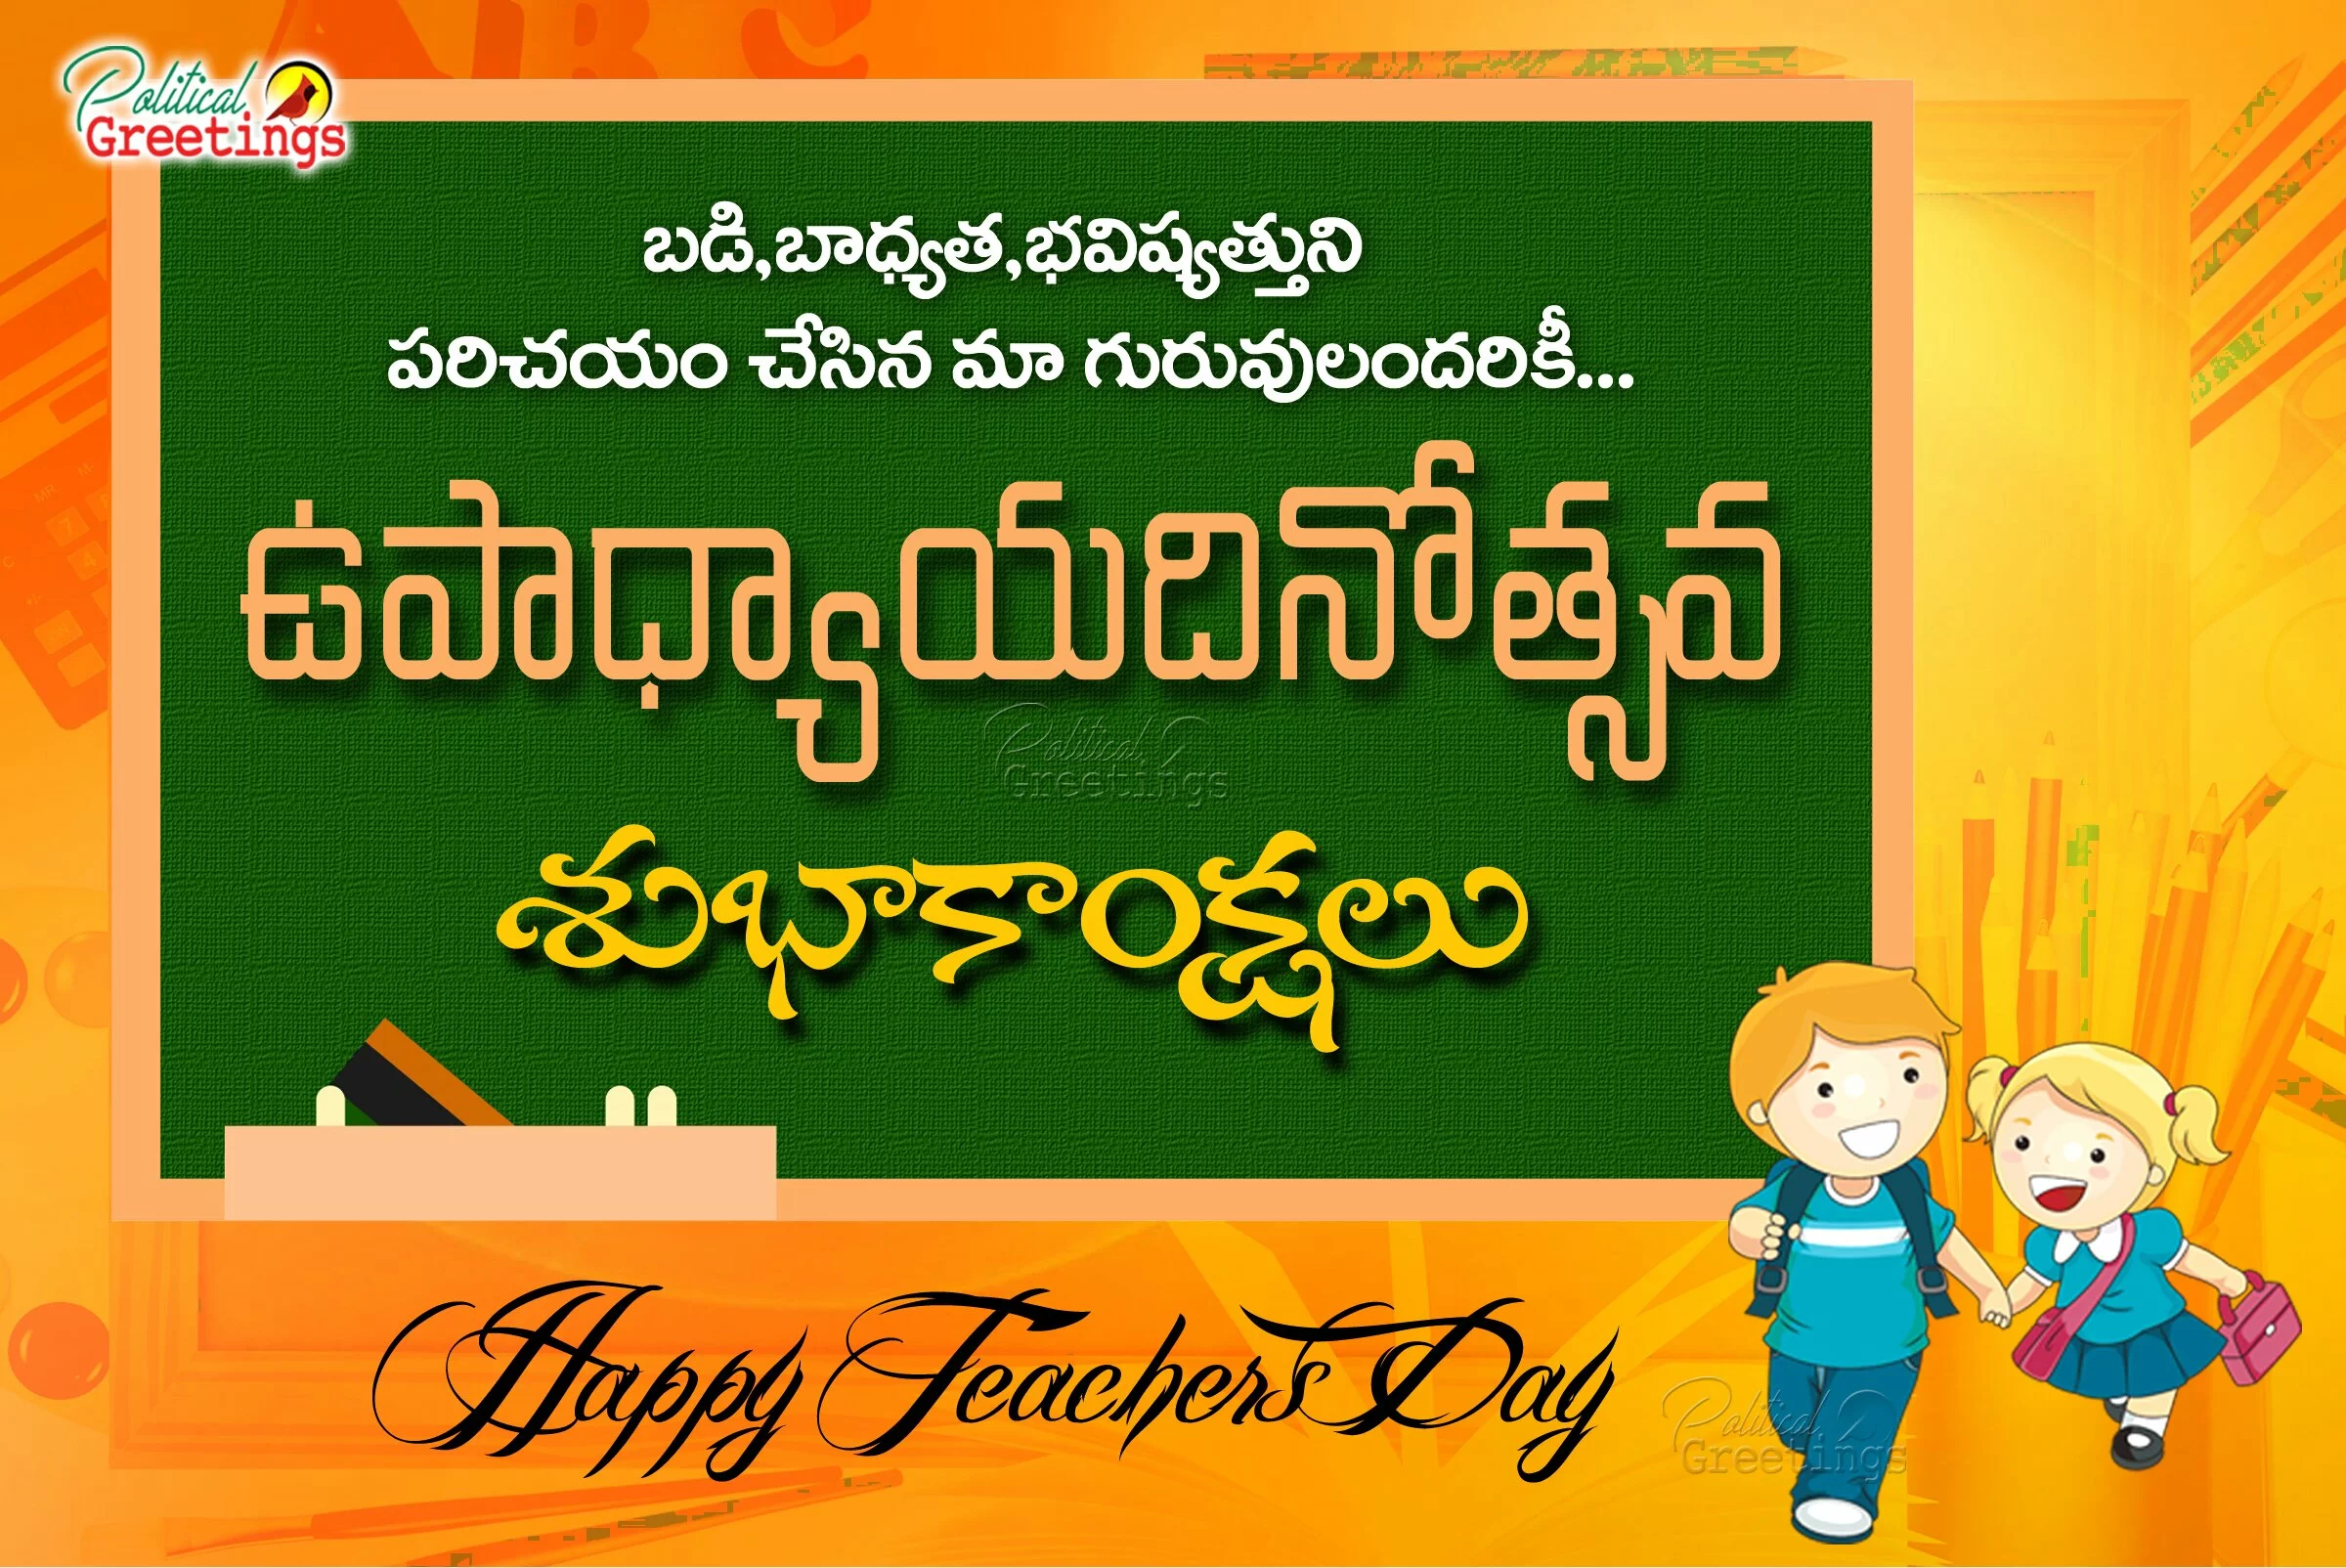 Sarvepalli Radhakrishnan Hd Wallpapers With Teachers day Telugu Greetings Free Download